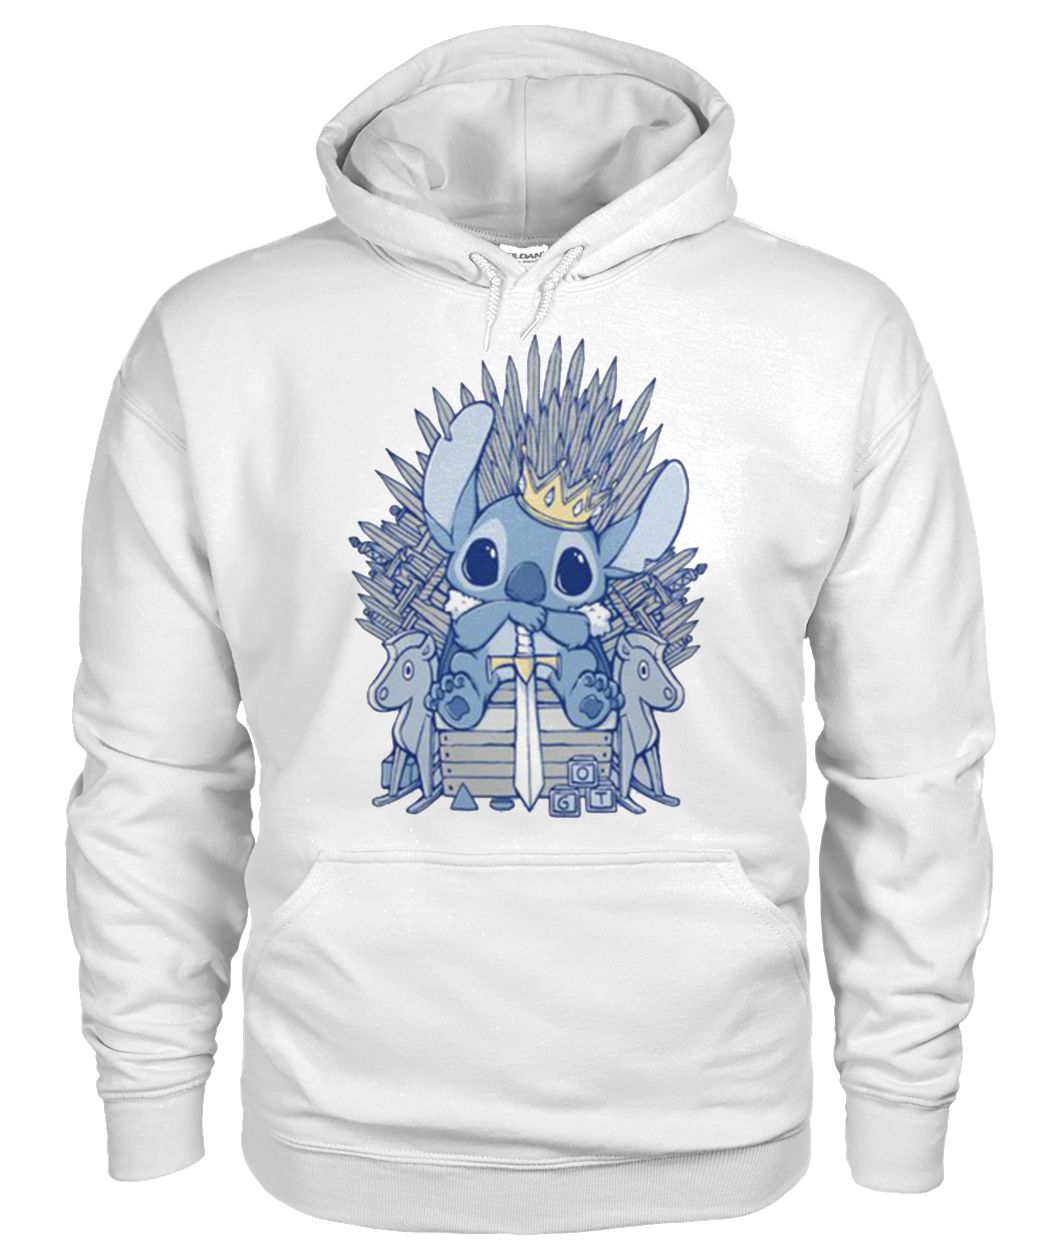 Stitch king game of thrones gildan hoodie